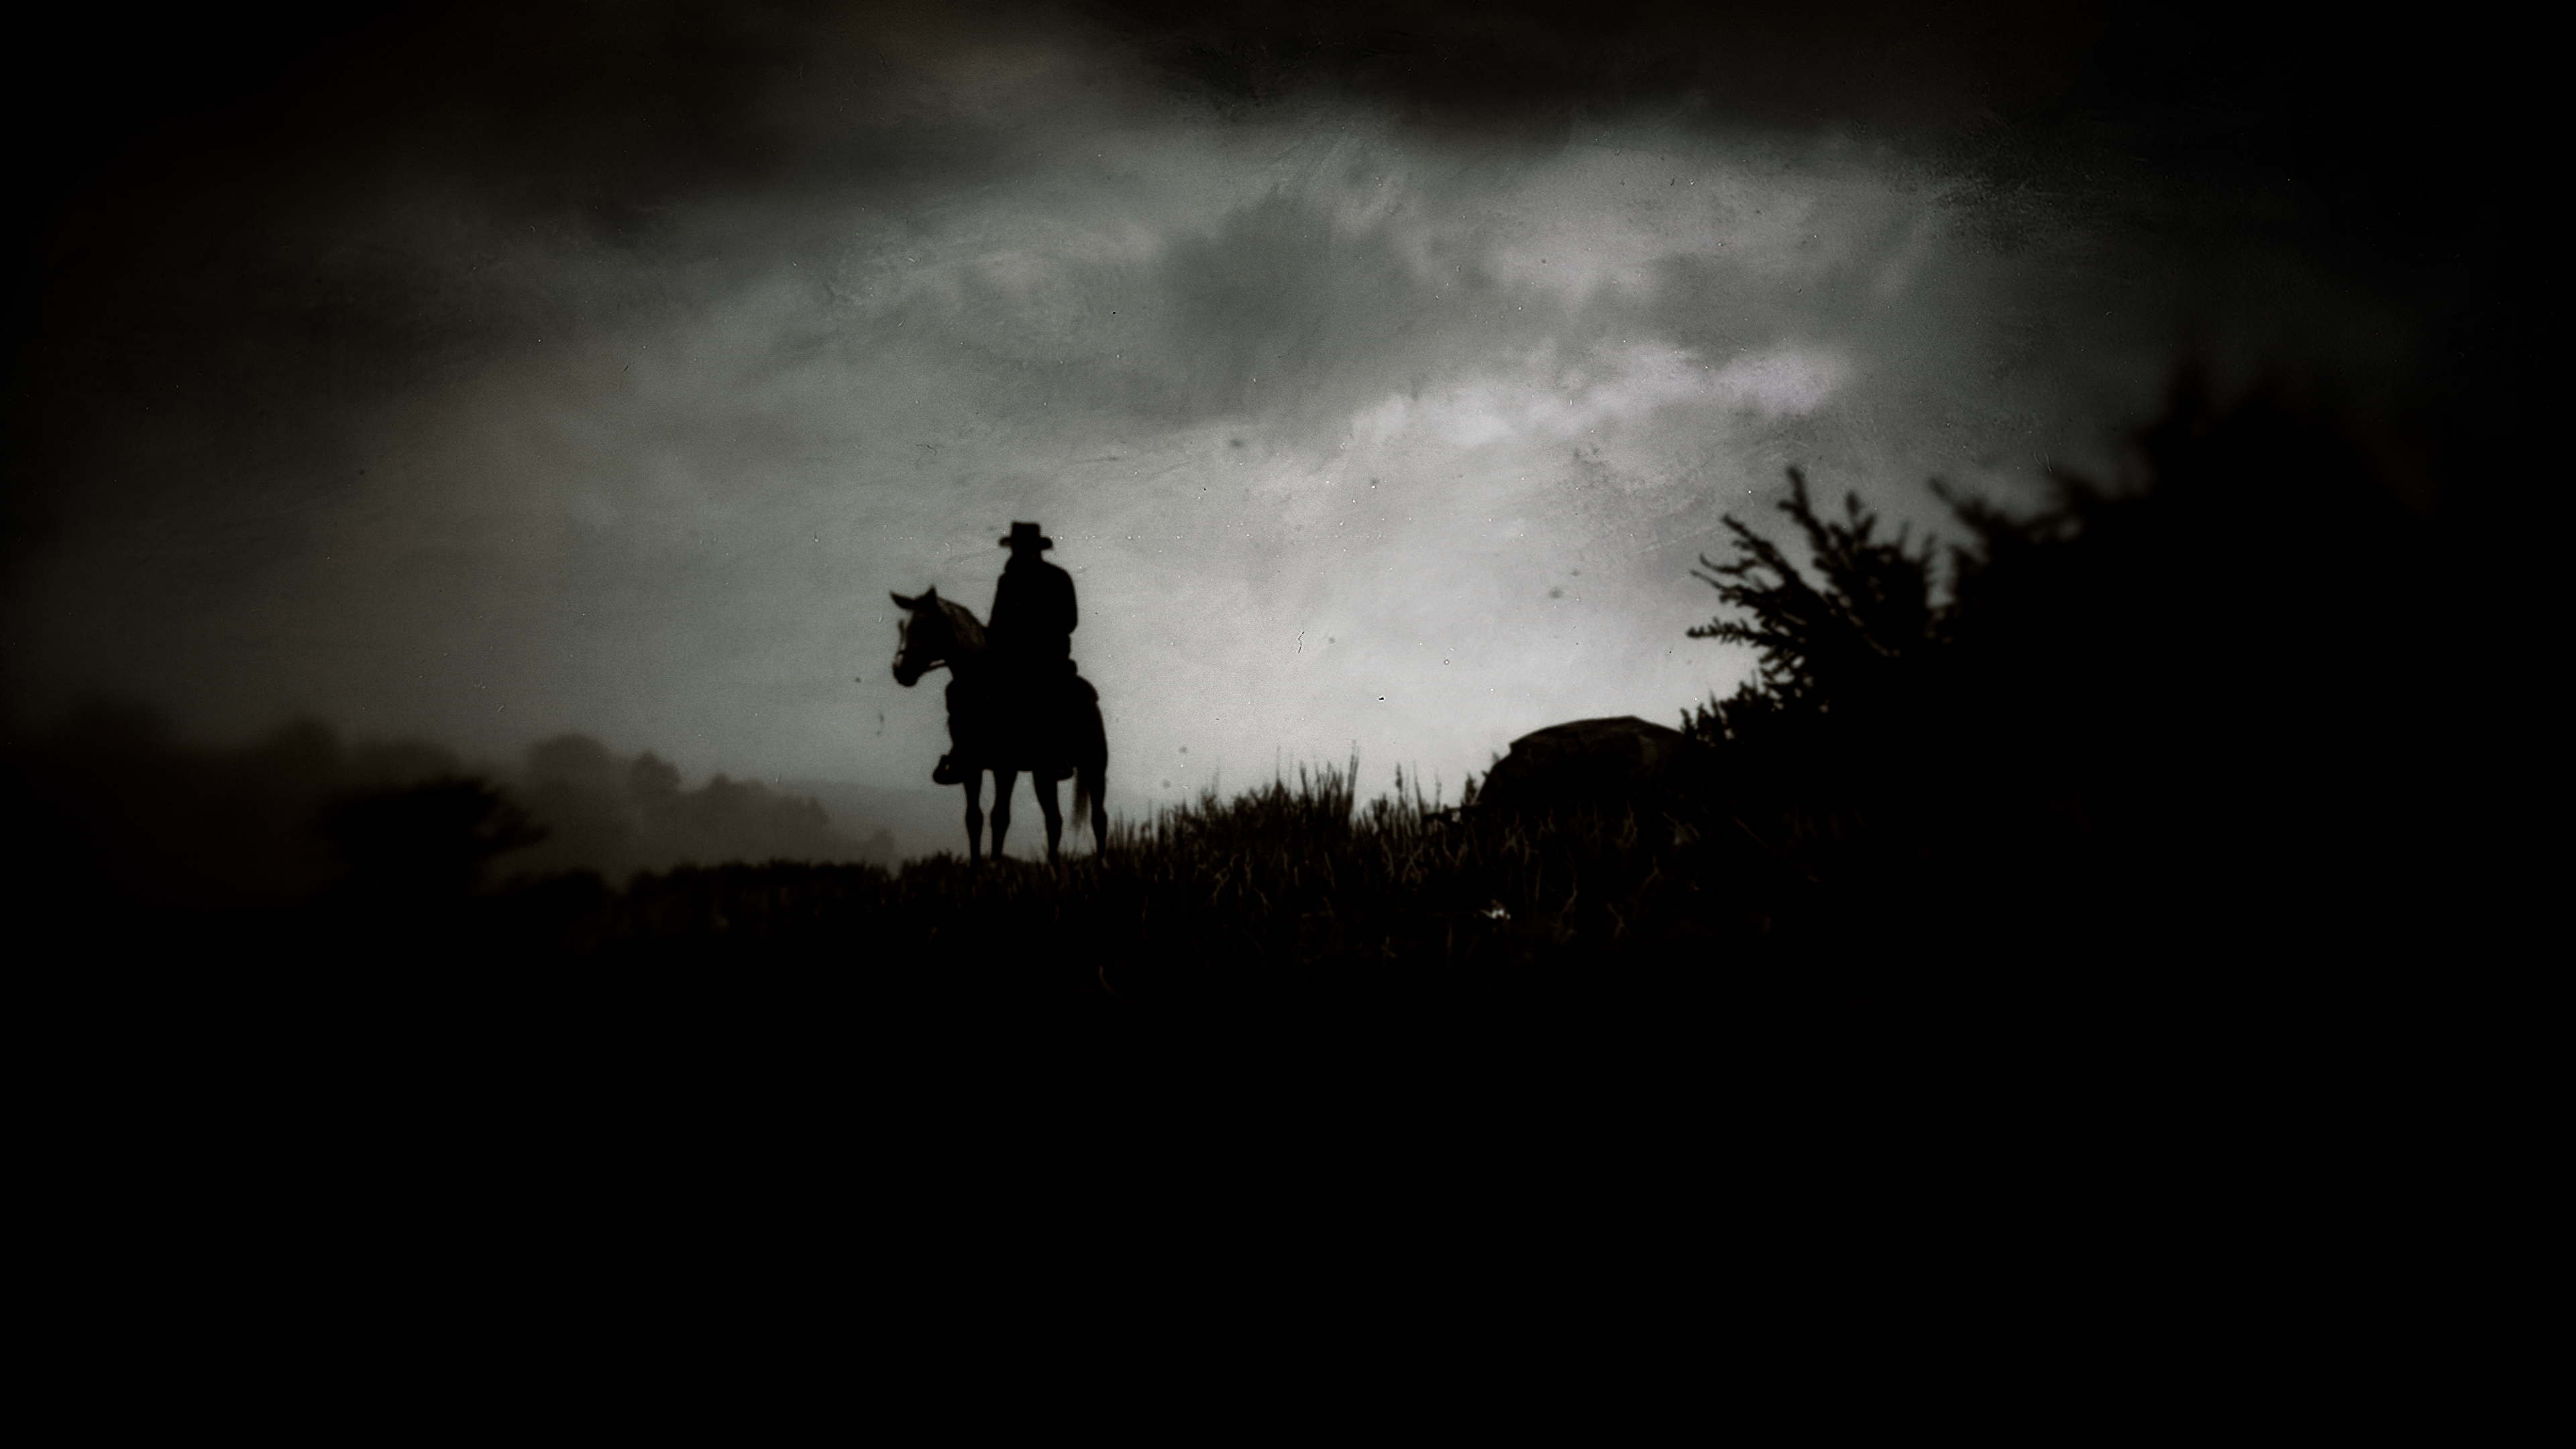 General 3840x2160 western Red Dead Redemption 2 monochrome dark screen shot Rockstar Games Arthur Morgan cowboy horse video games video game characters